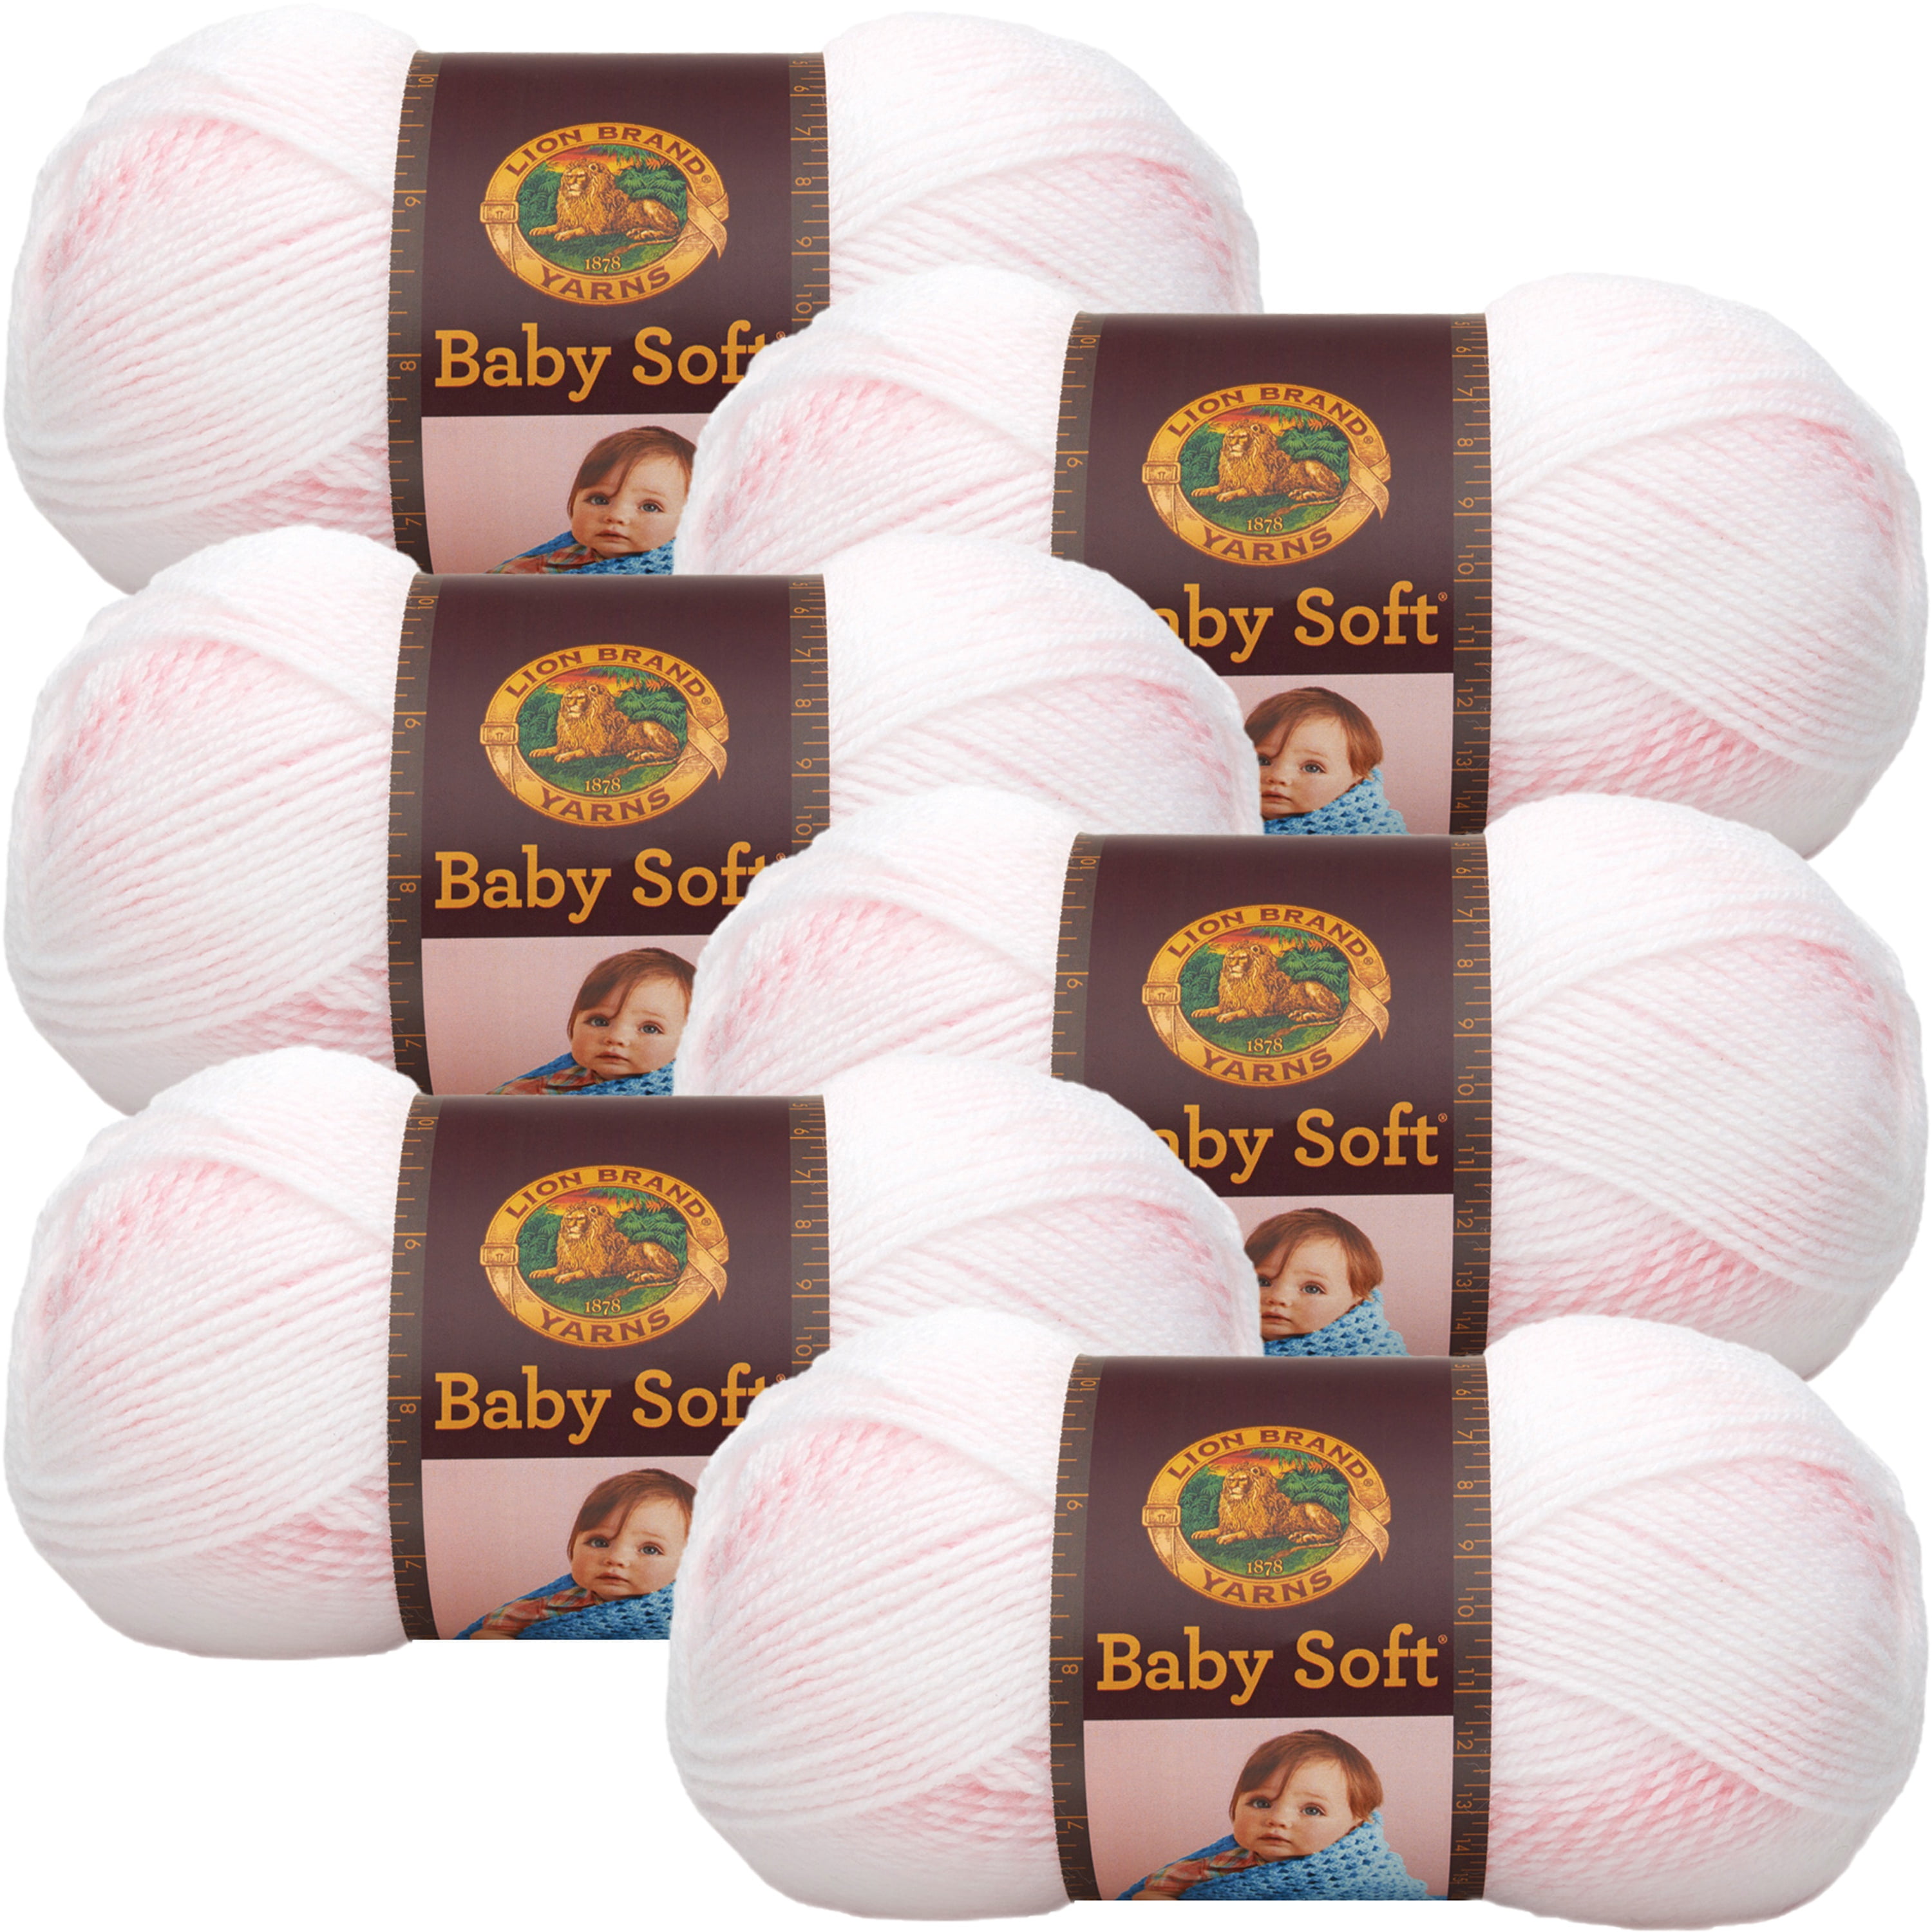 Lion Brand Baby Soft Yarn-Parfait Print, Multipack Of 6 